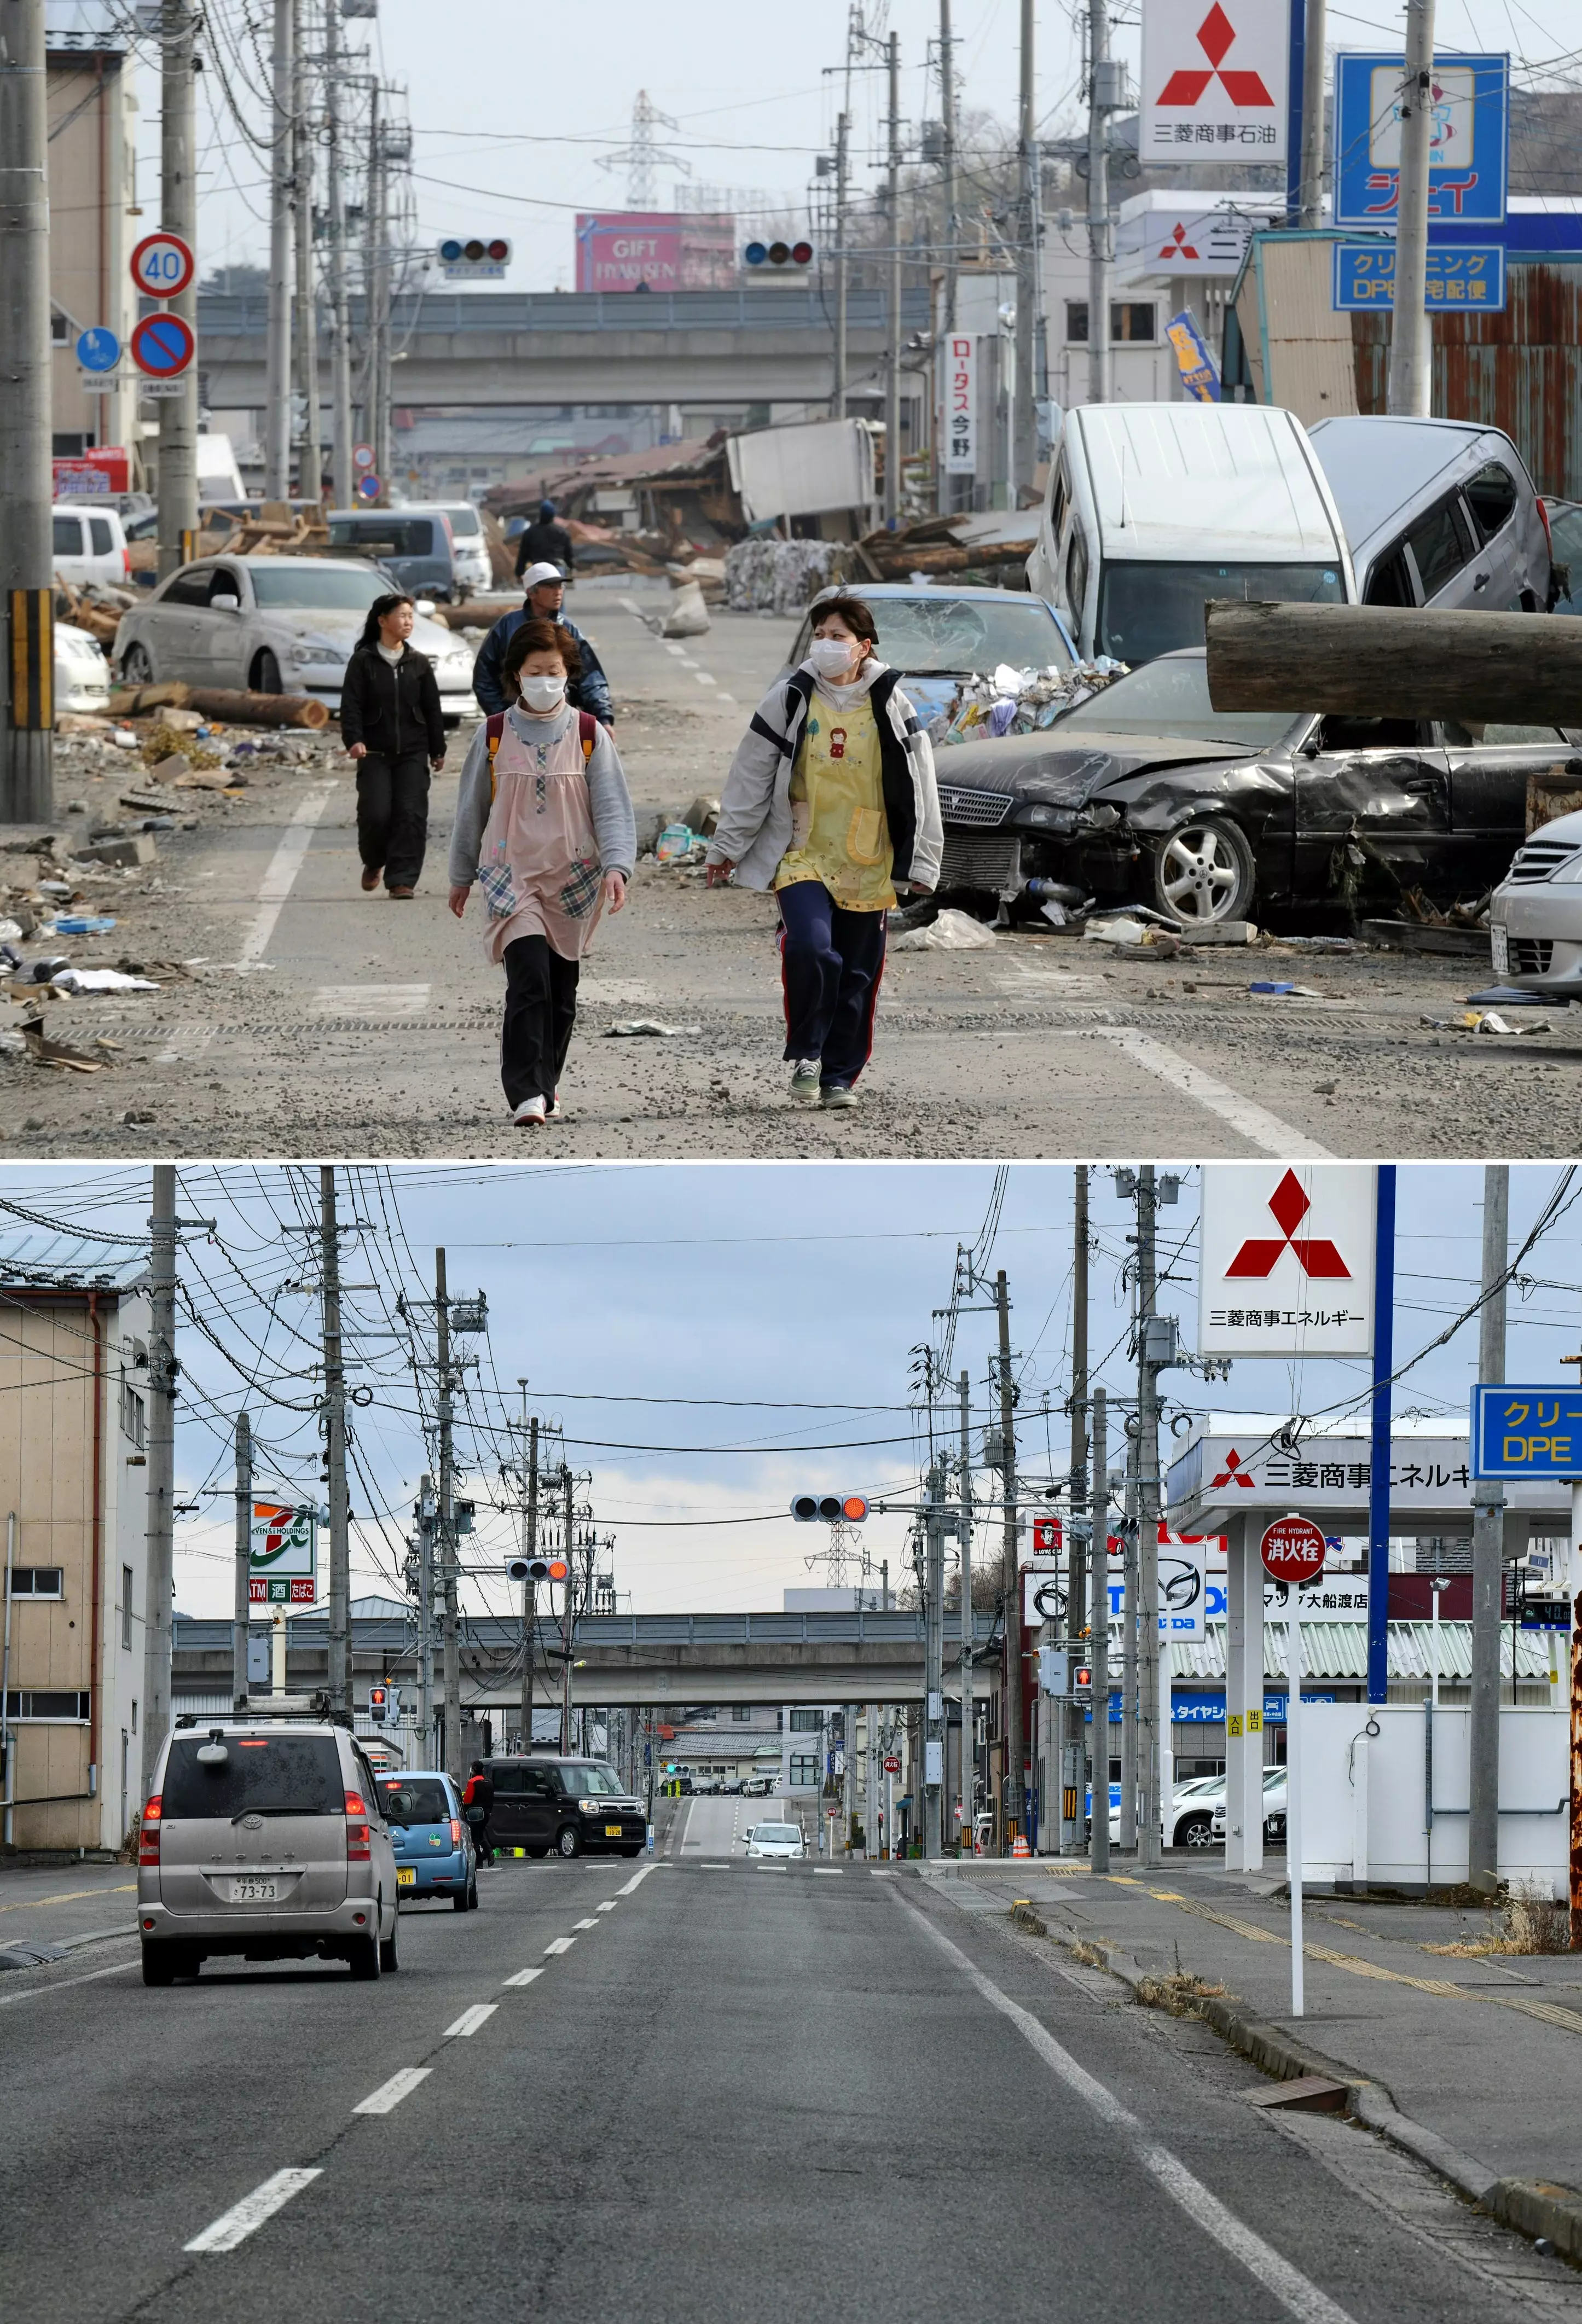 Ofunato, Iwate prefecture pictured ten years apart.